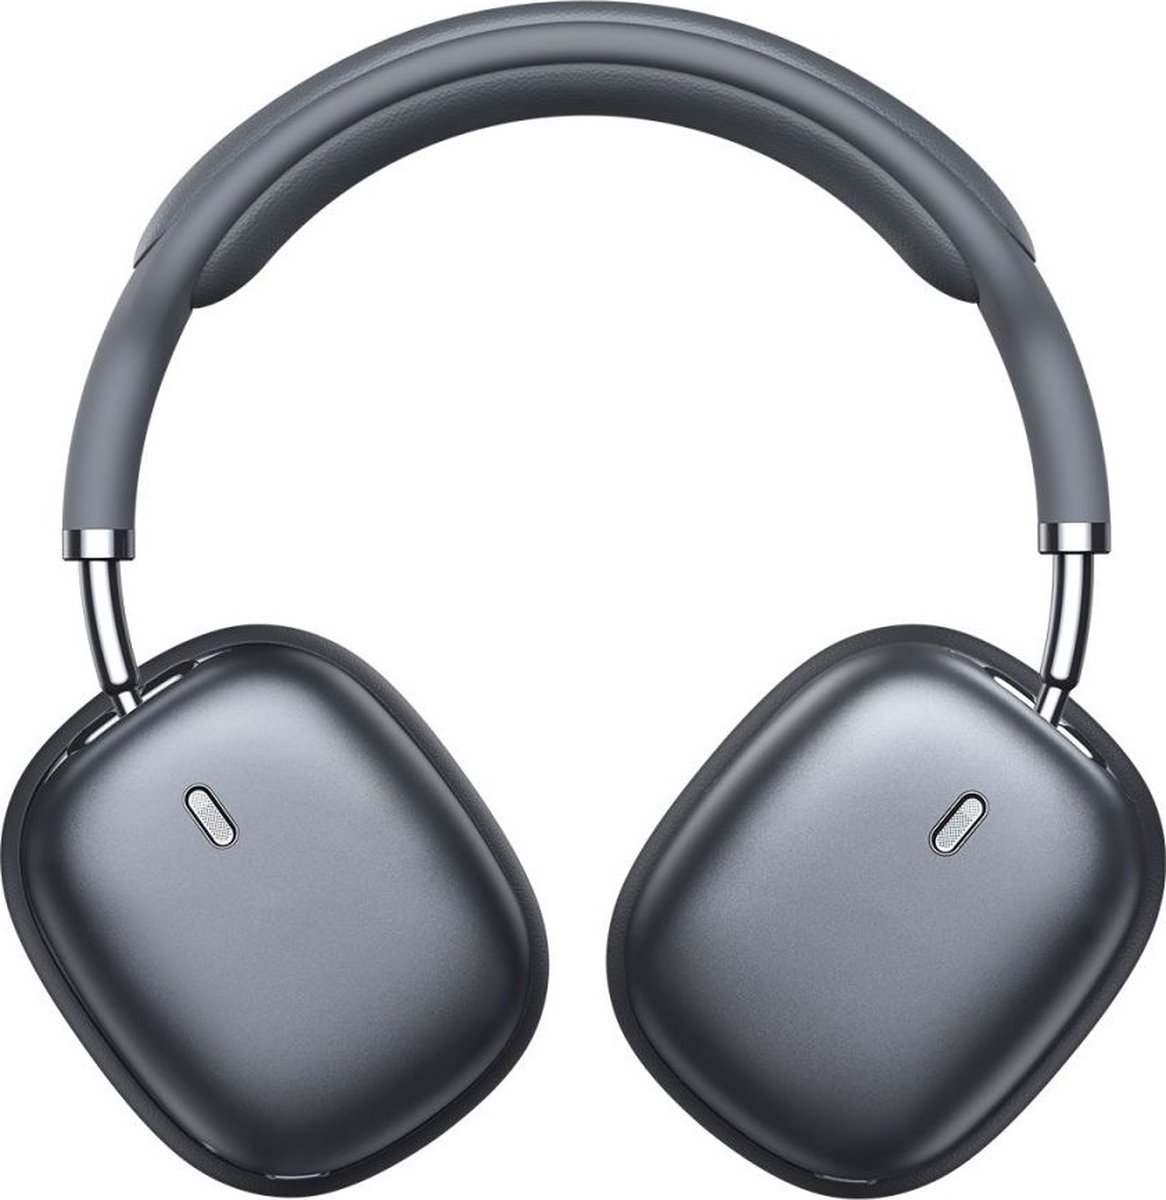 Baseus Bowie H2 Noise Cancelling Bluetooth Over-Ear Koptelefoon Grijs